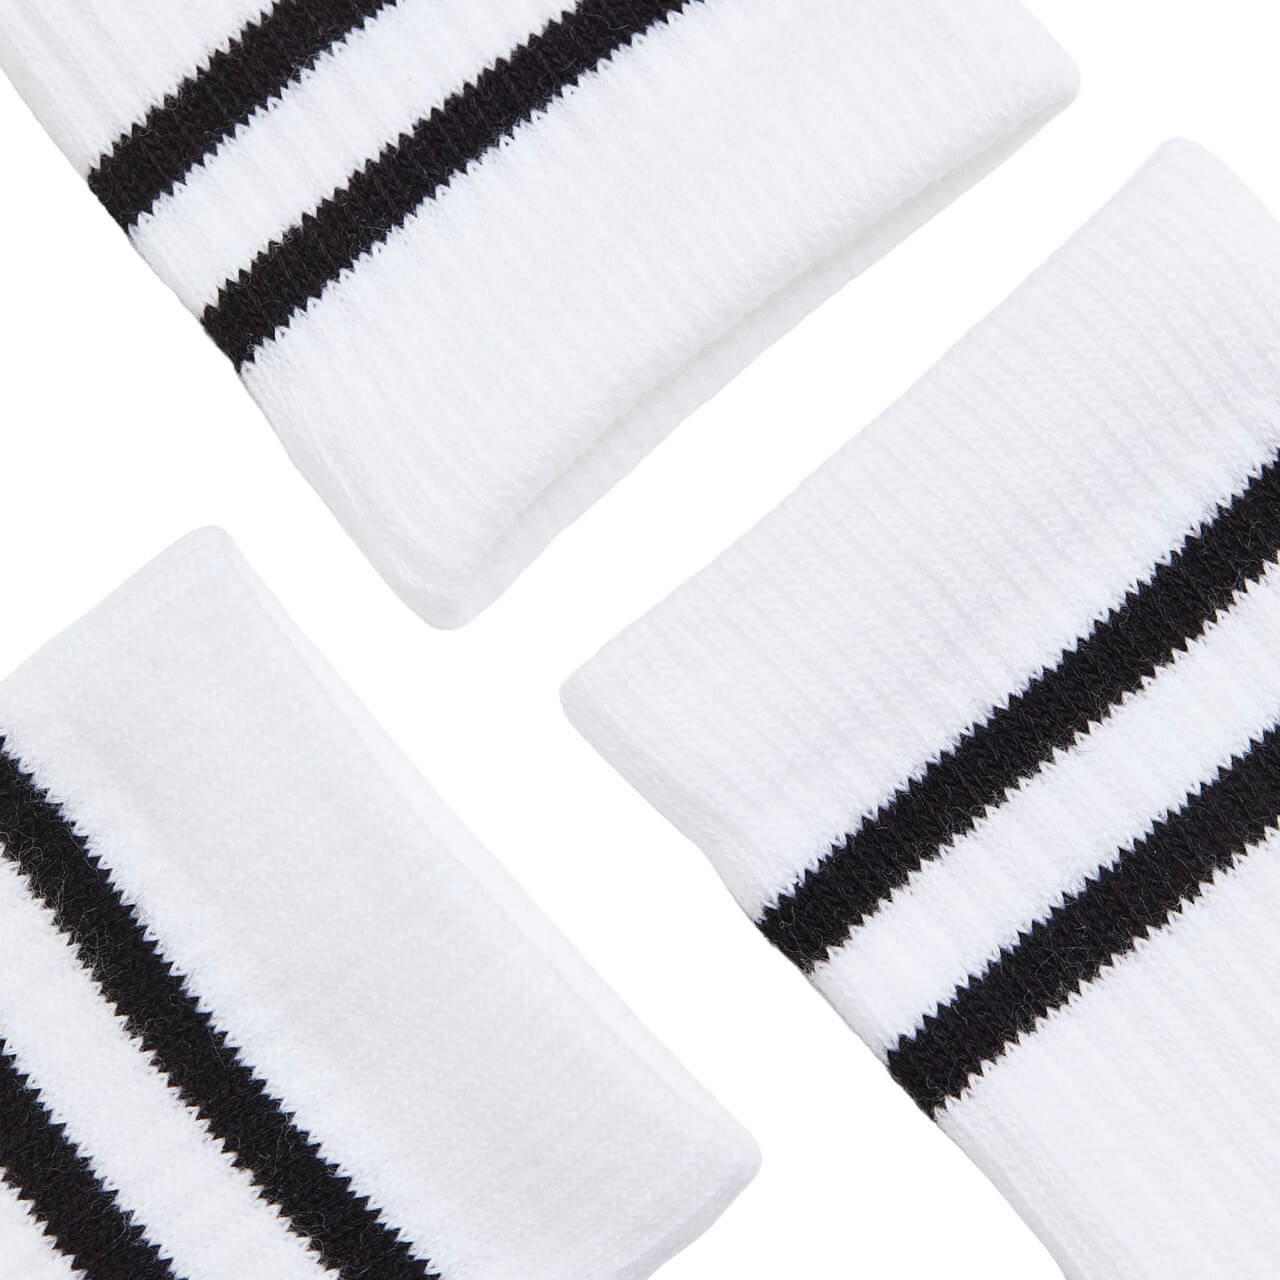 Набор носков H&M DryMove, 3 пары, черный/белый